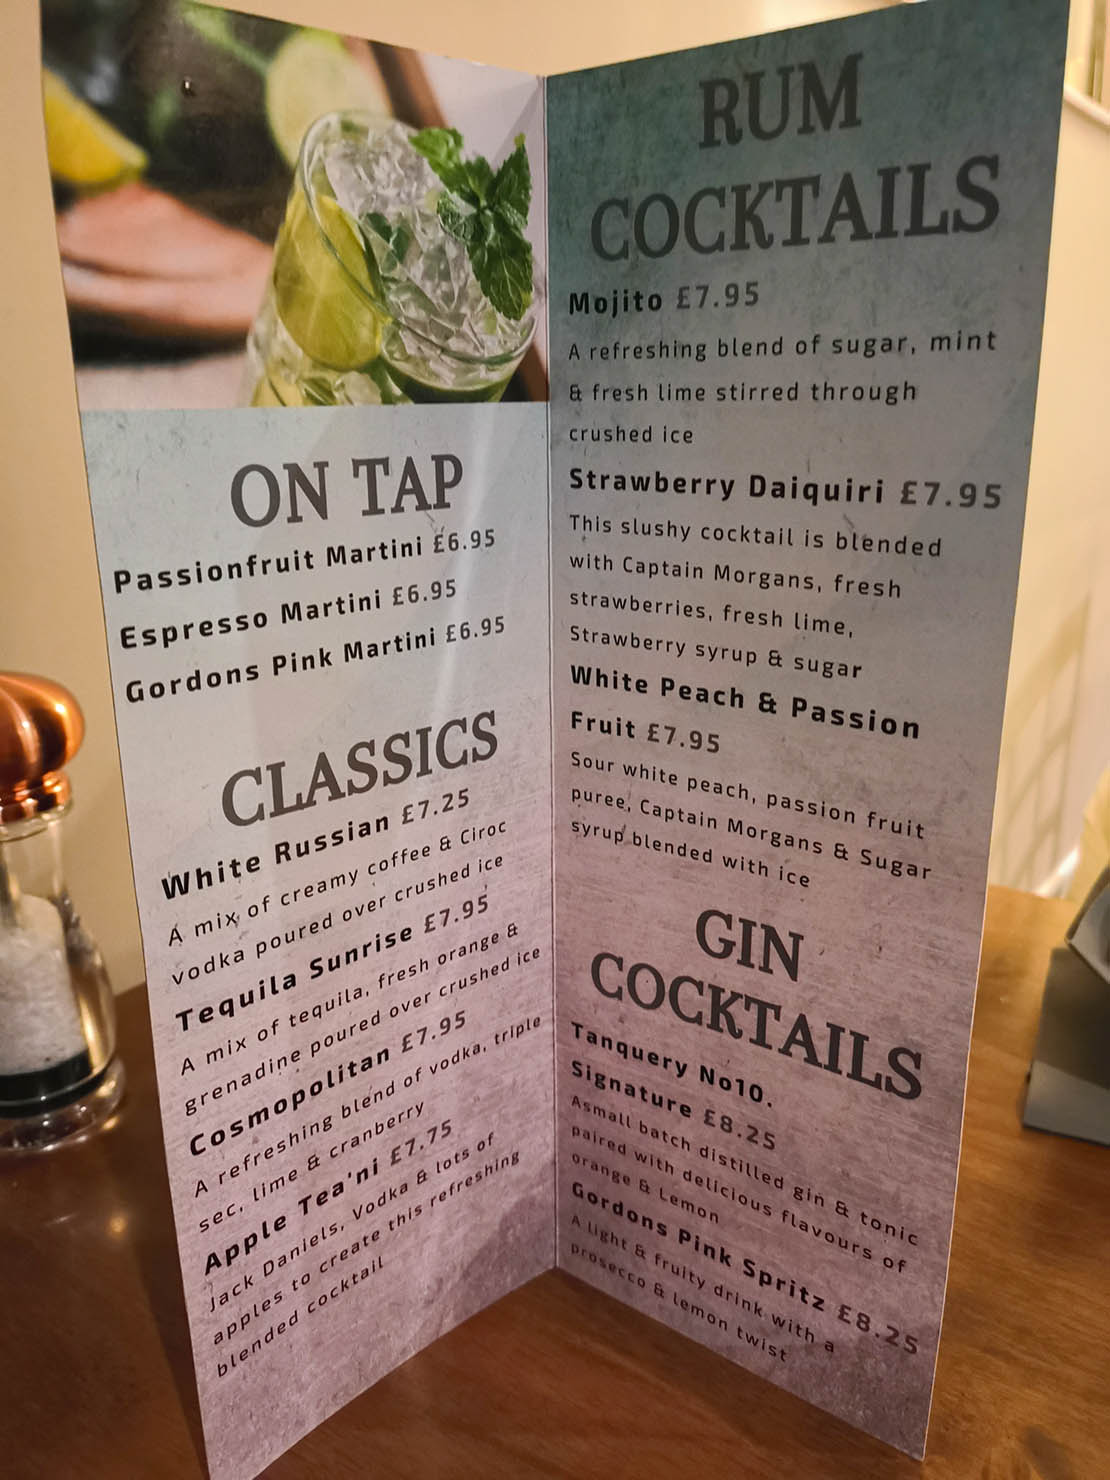 The extensive cocktail menu.